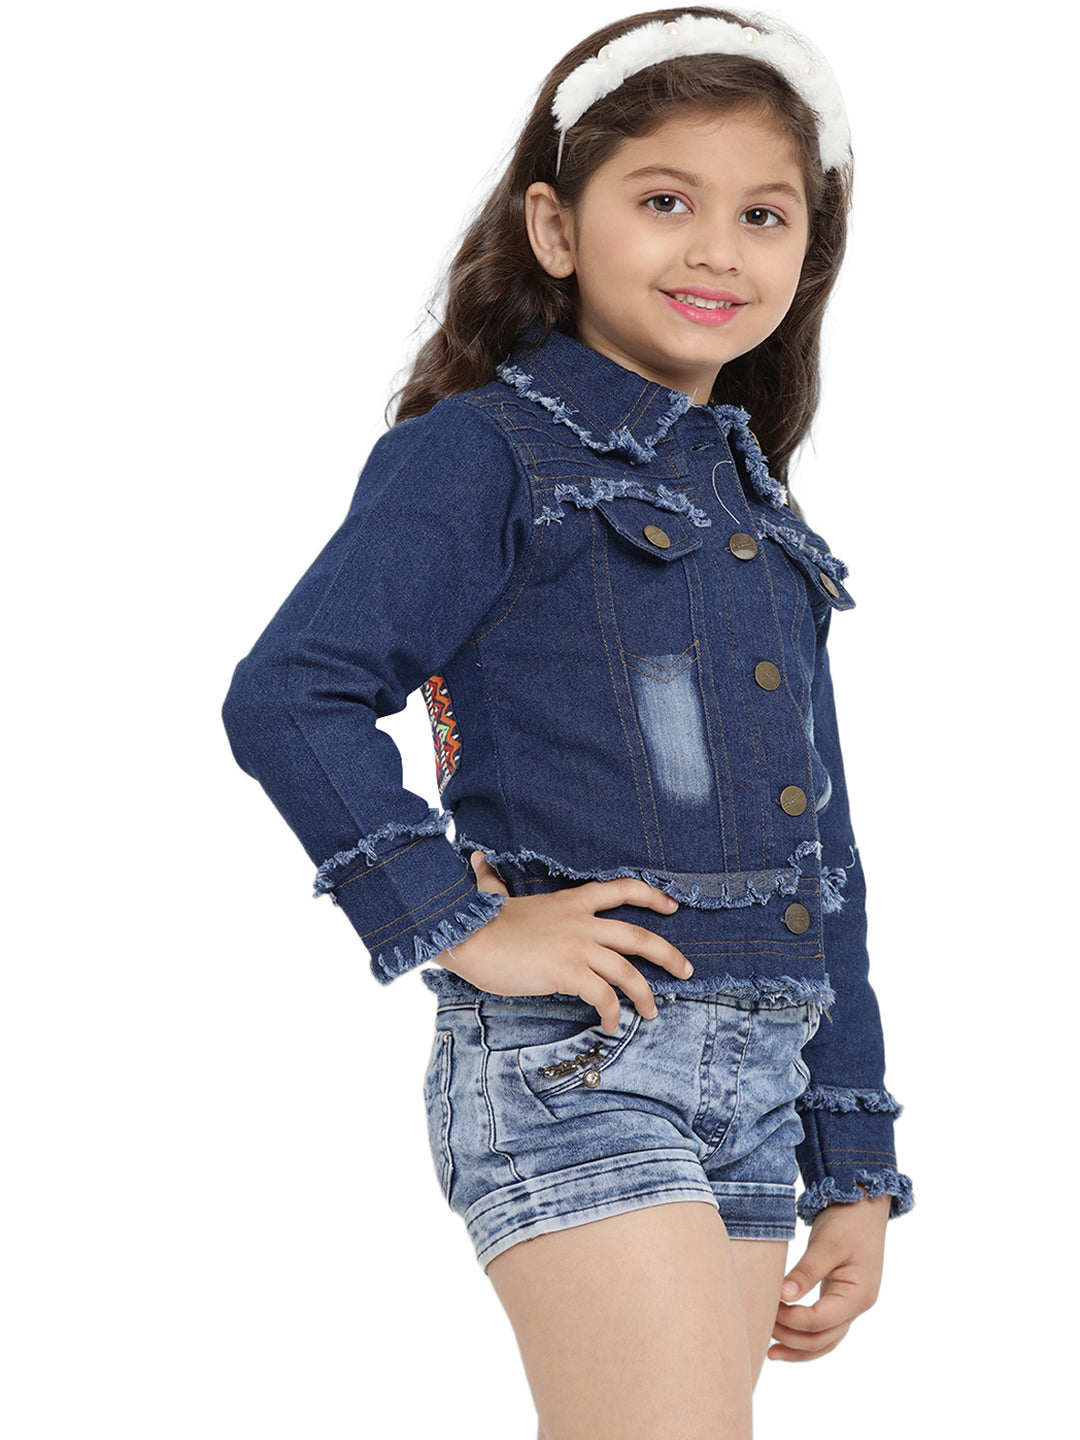 Shop Girls Jackets & Girls Coats Online | R&B UAE